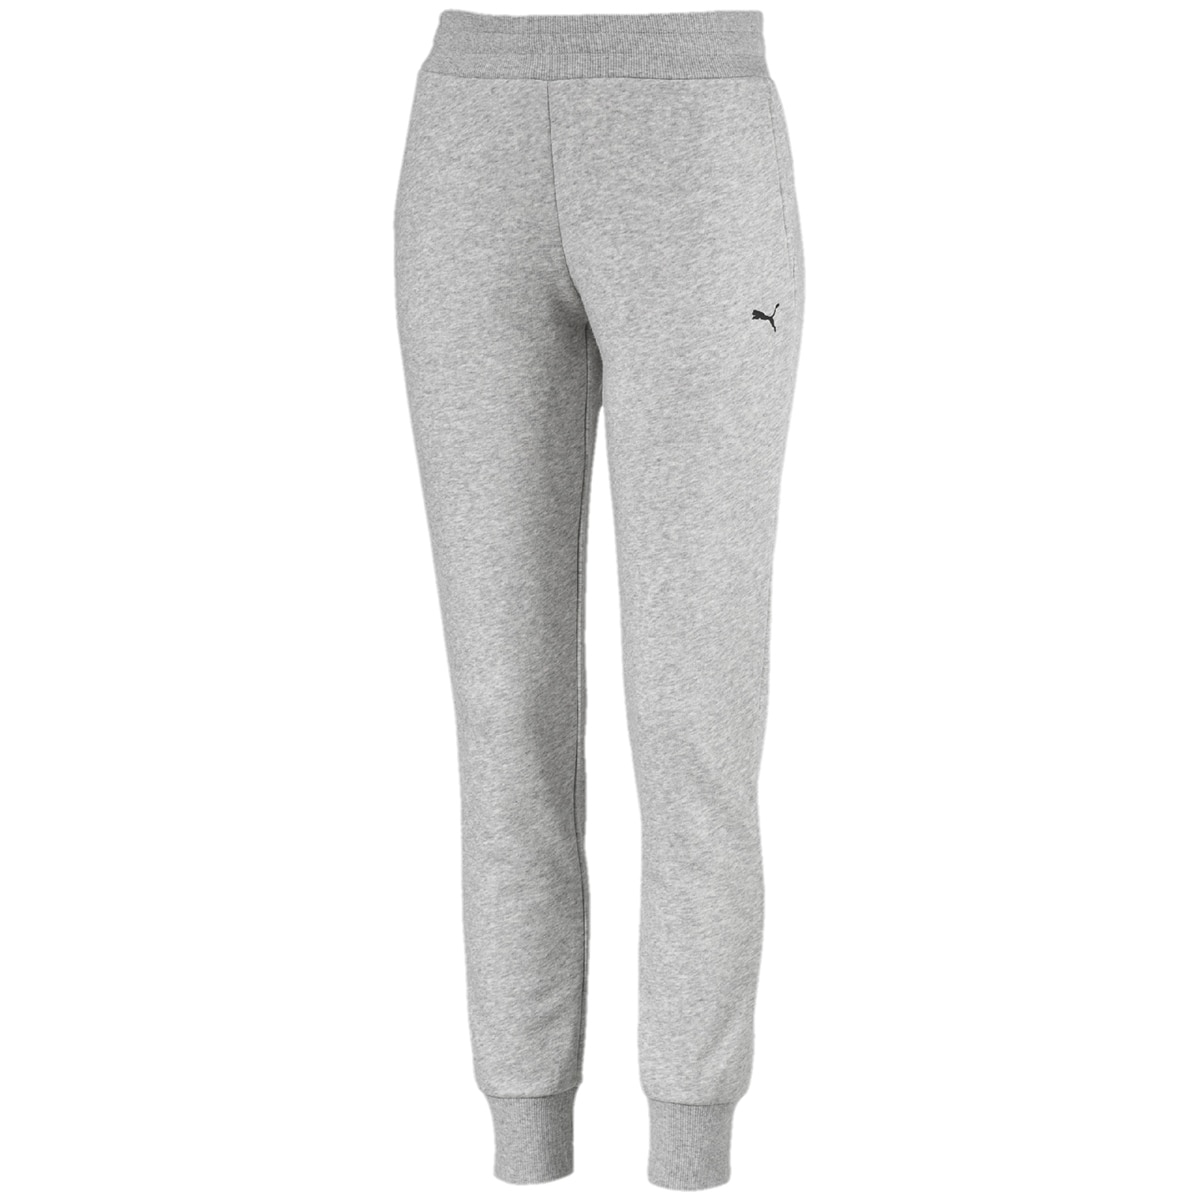 puma grey pants